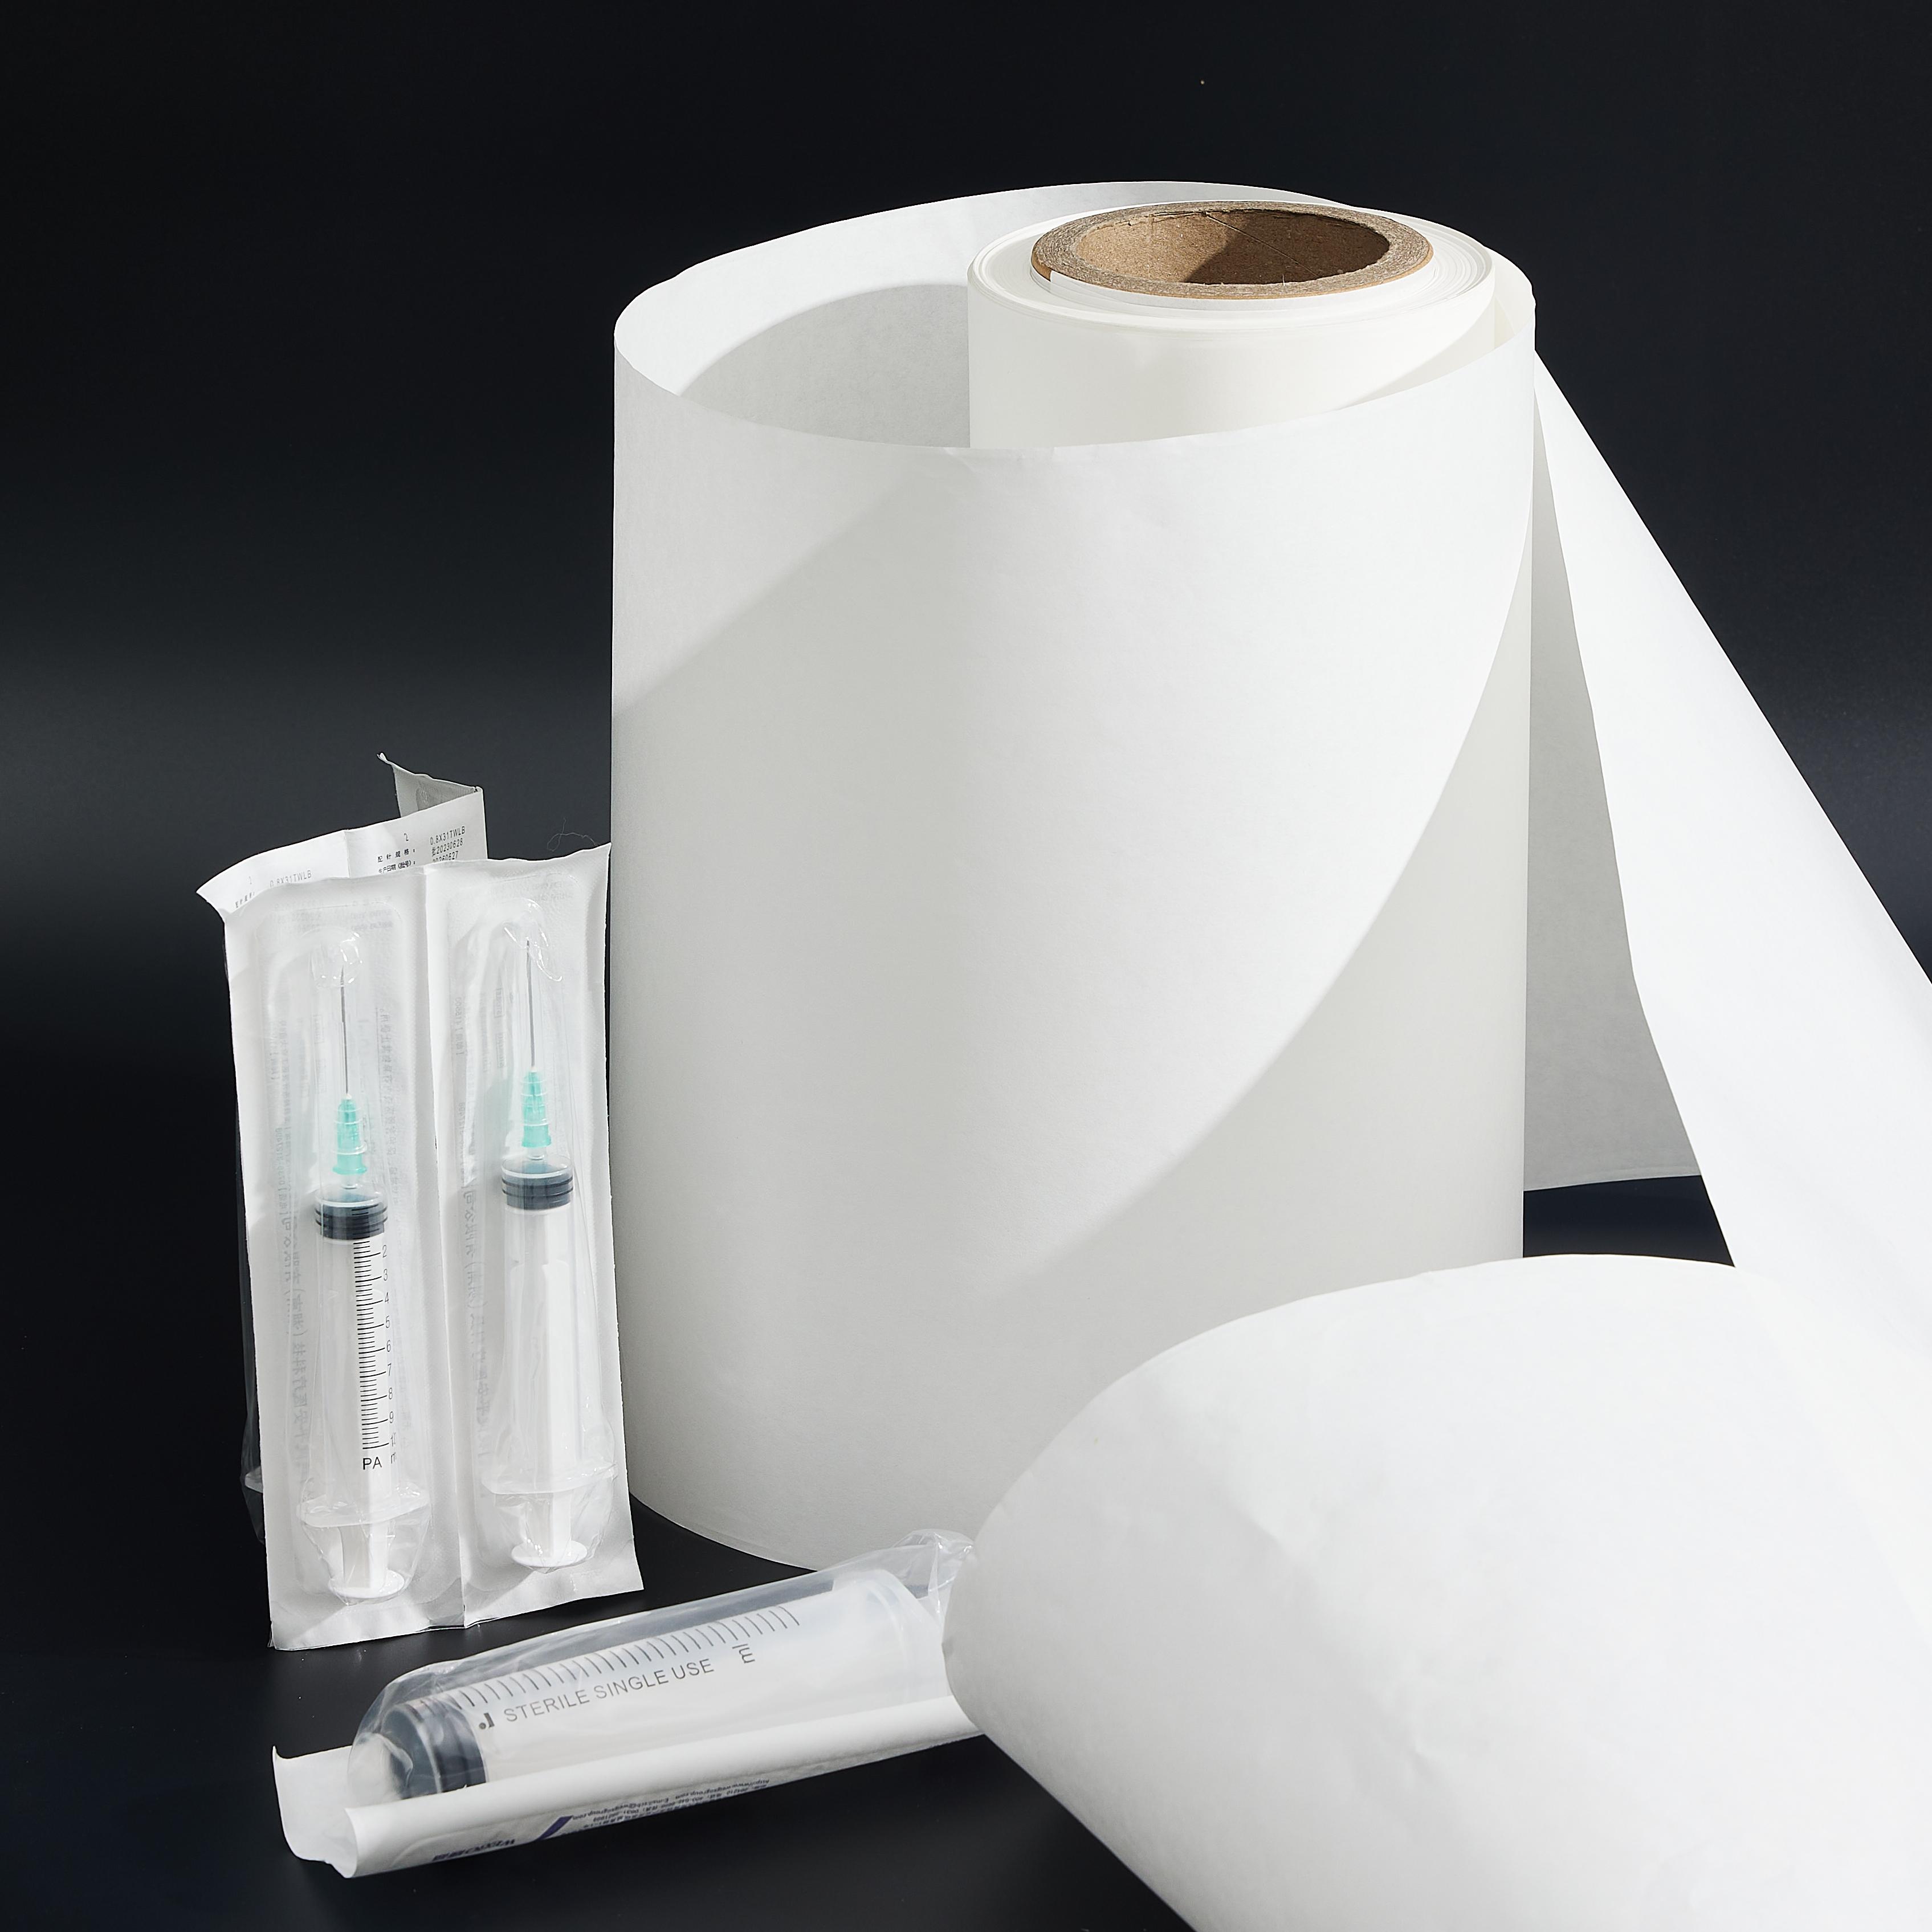 EN Medical Sterilization Paper Sealed with PP Film for Packaging of Surgical Dental Instruments